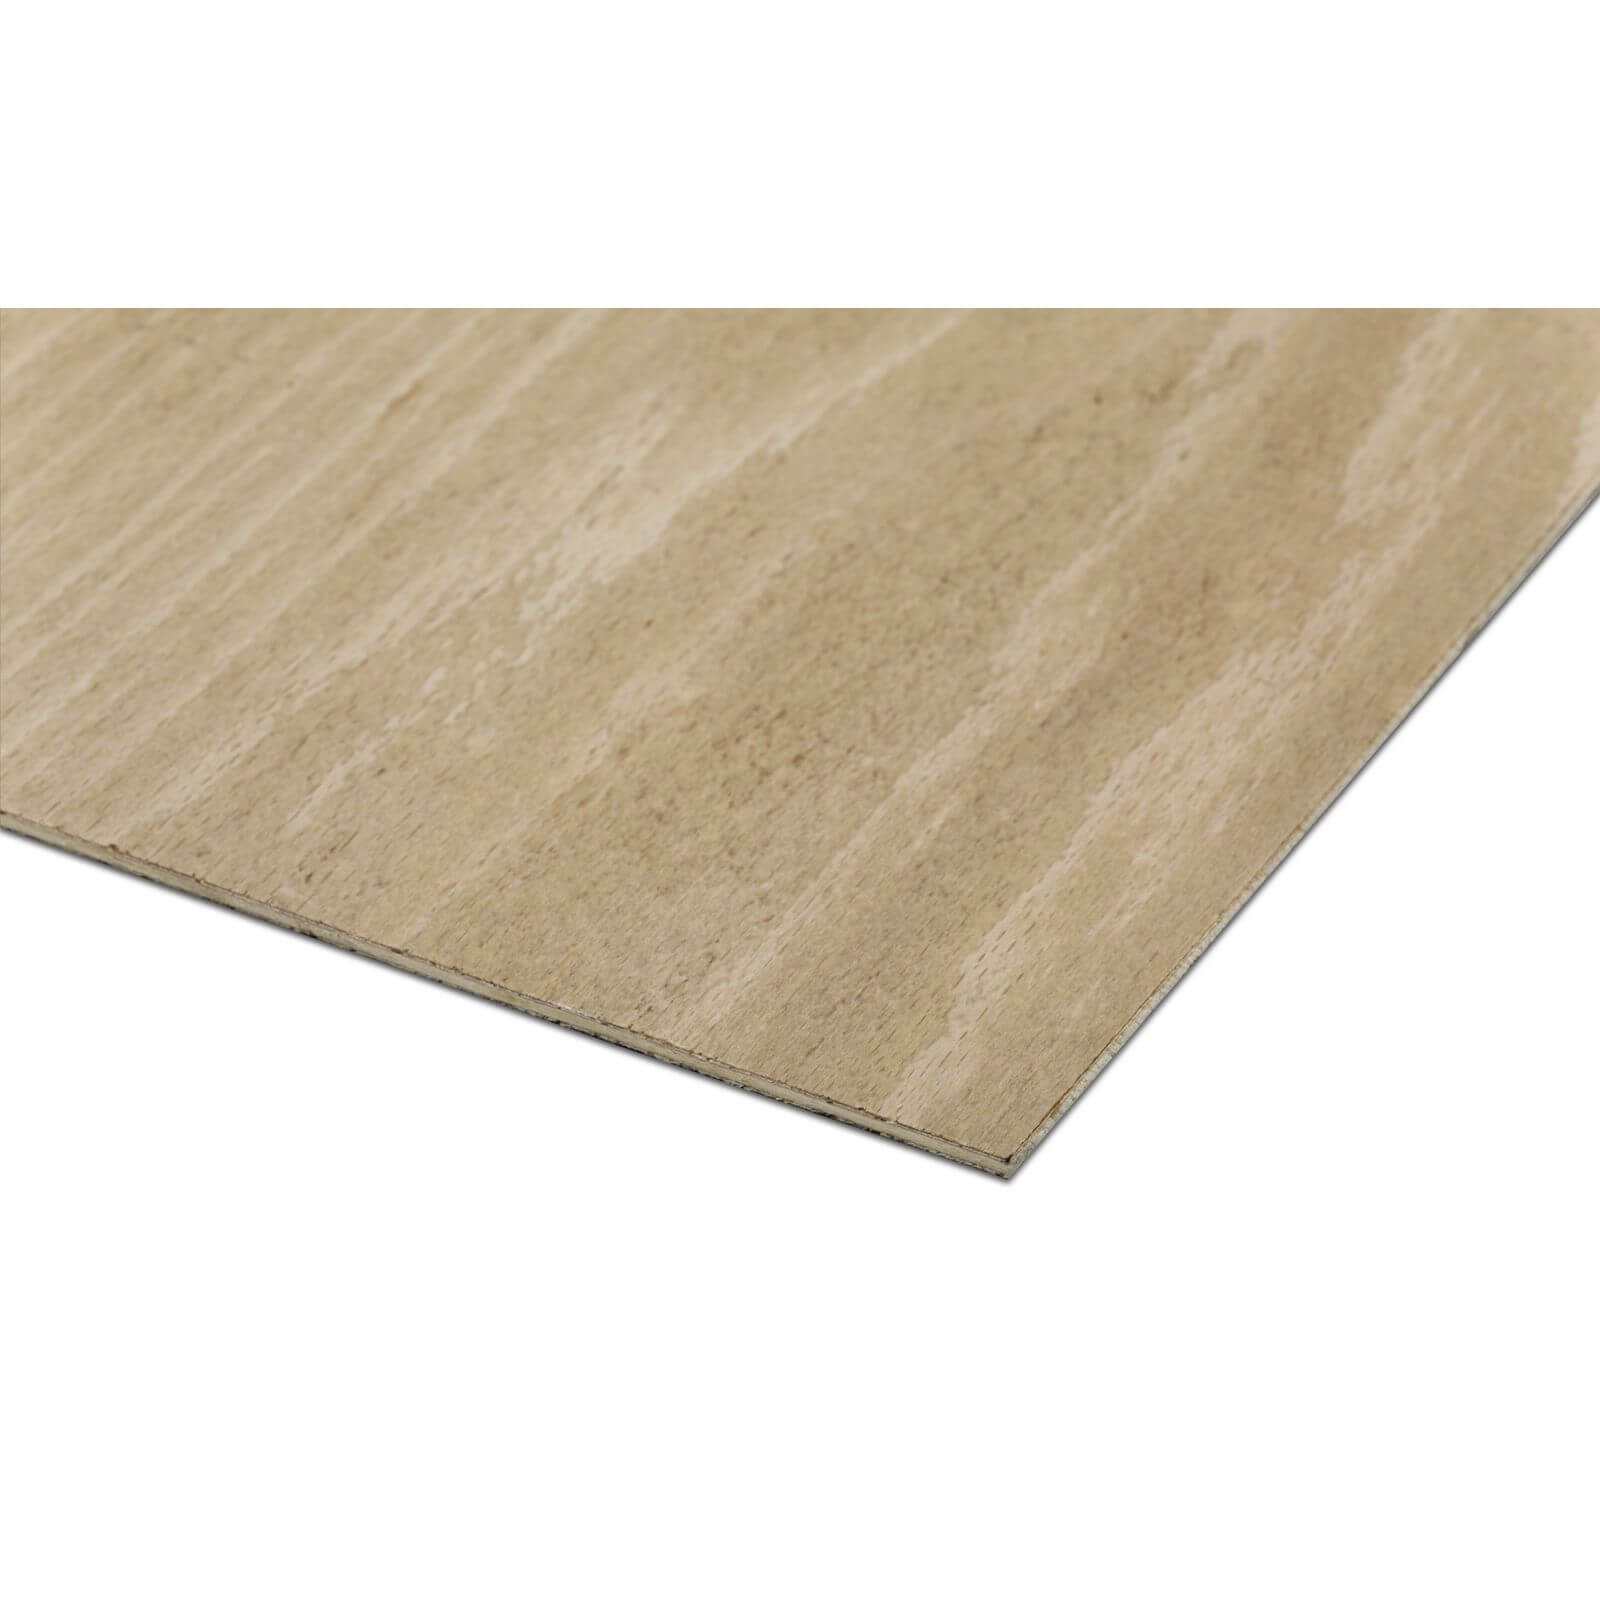 Metsa Hardwood Plywood Board 1.2m (1220 x 607 x 3.6mm)